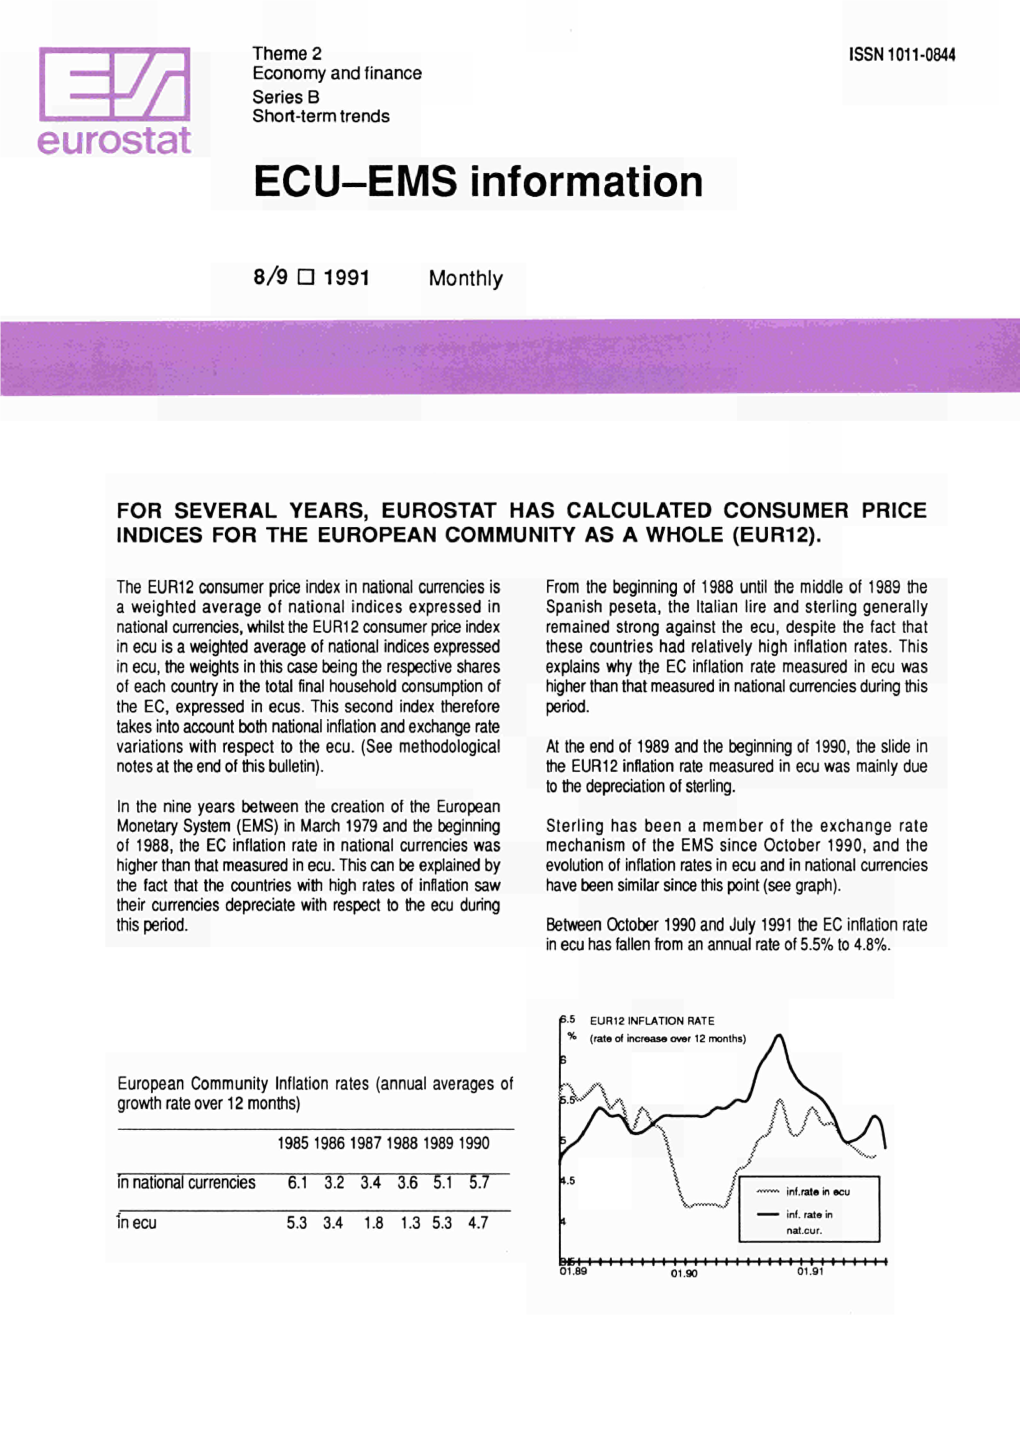 ECU-EMS Information : 8/9 1991 Monthly